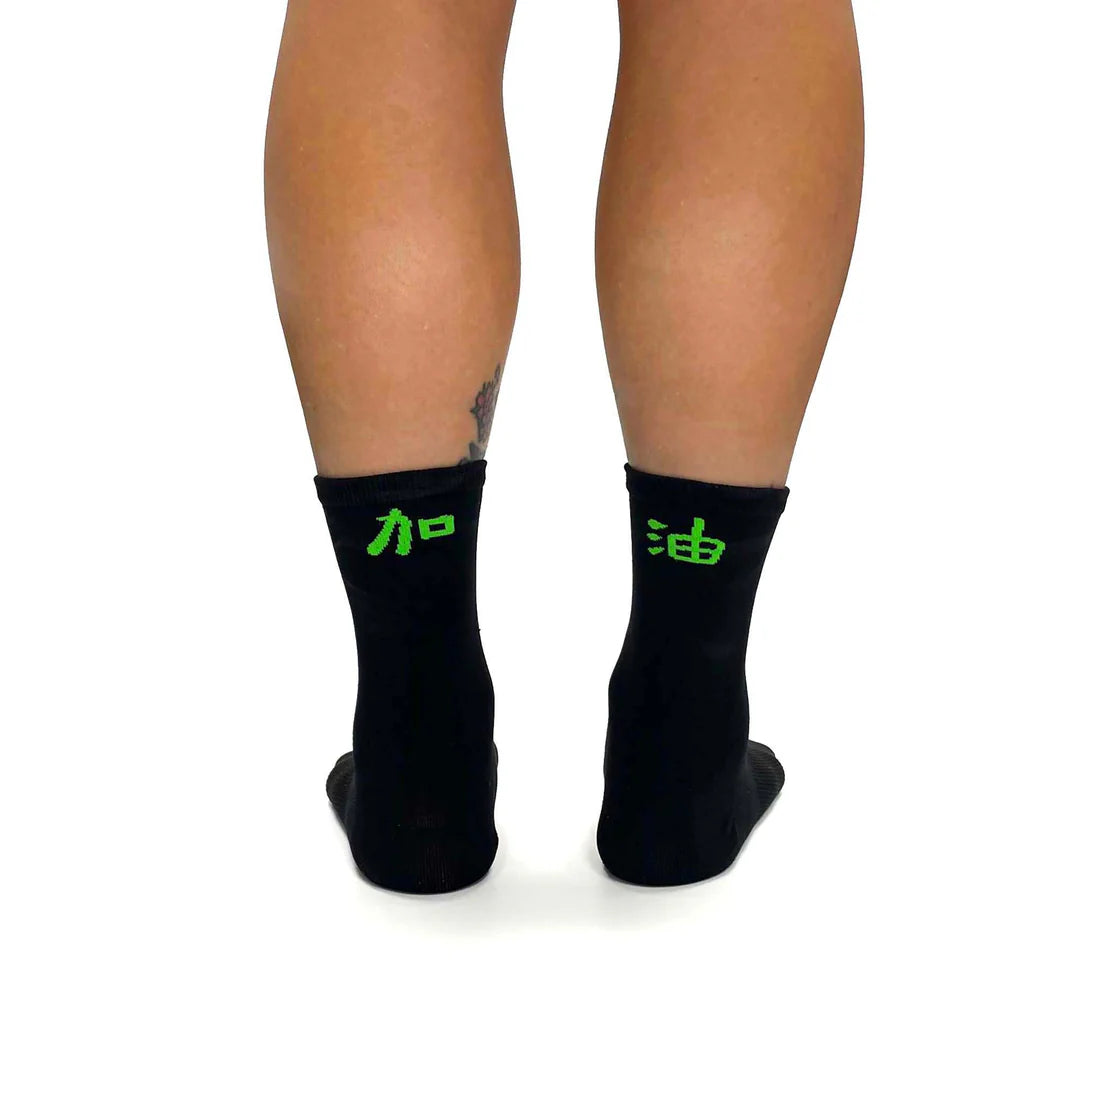 T8 Air Socks